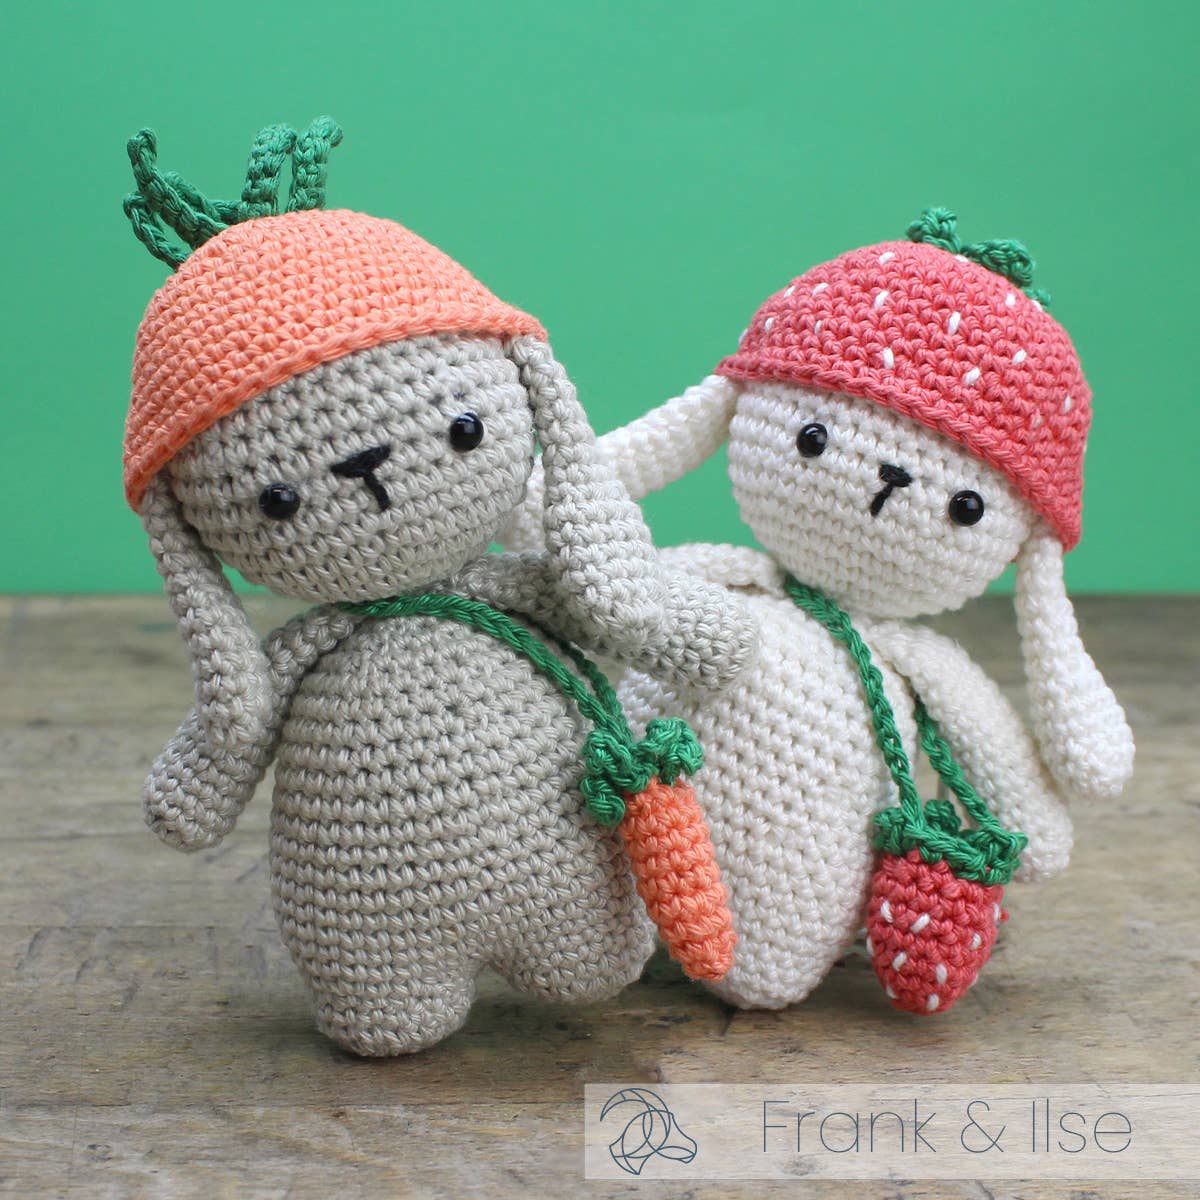 Hardicraft - Ilse Rabbit - Crochet Kit